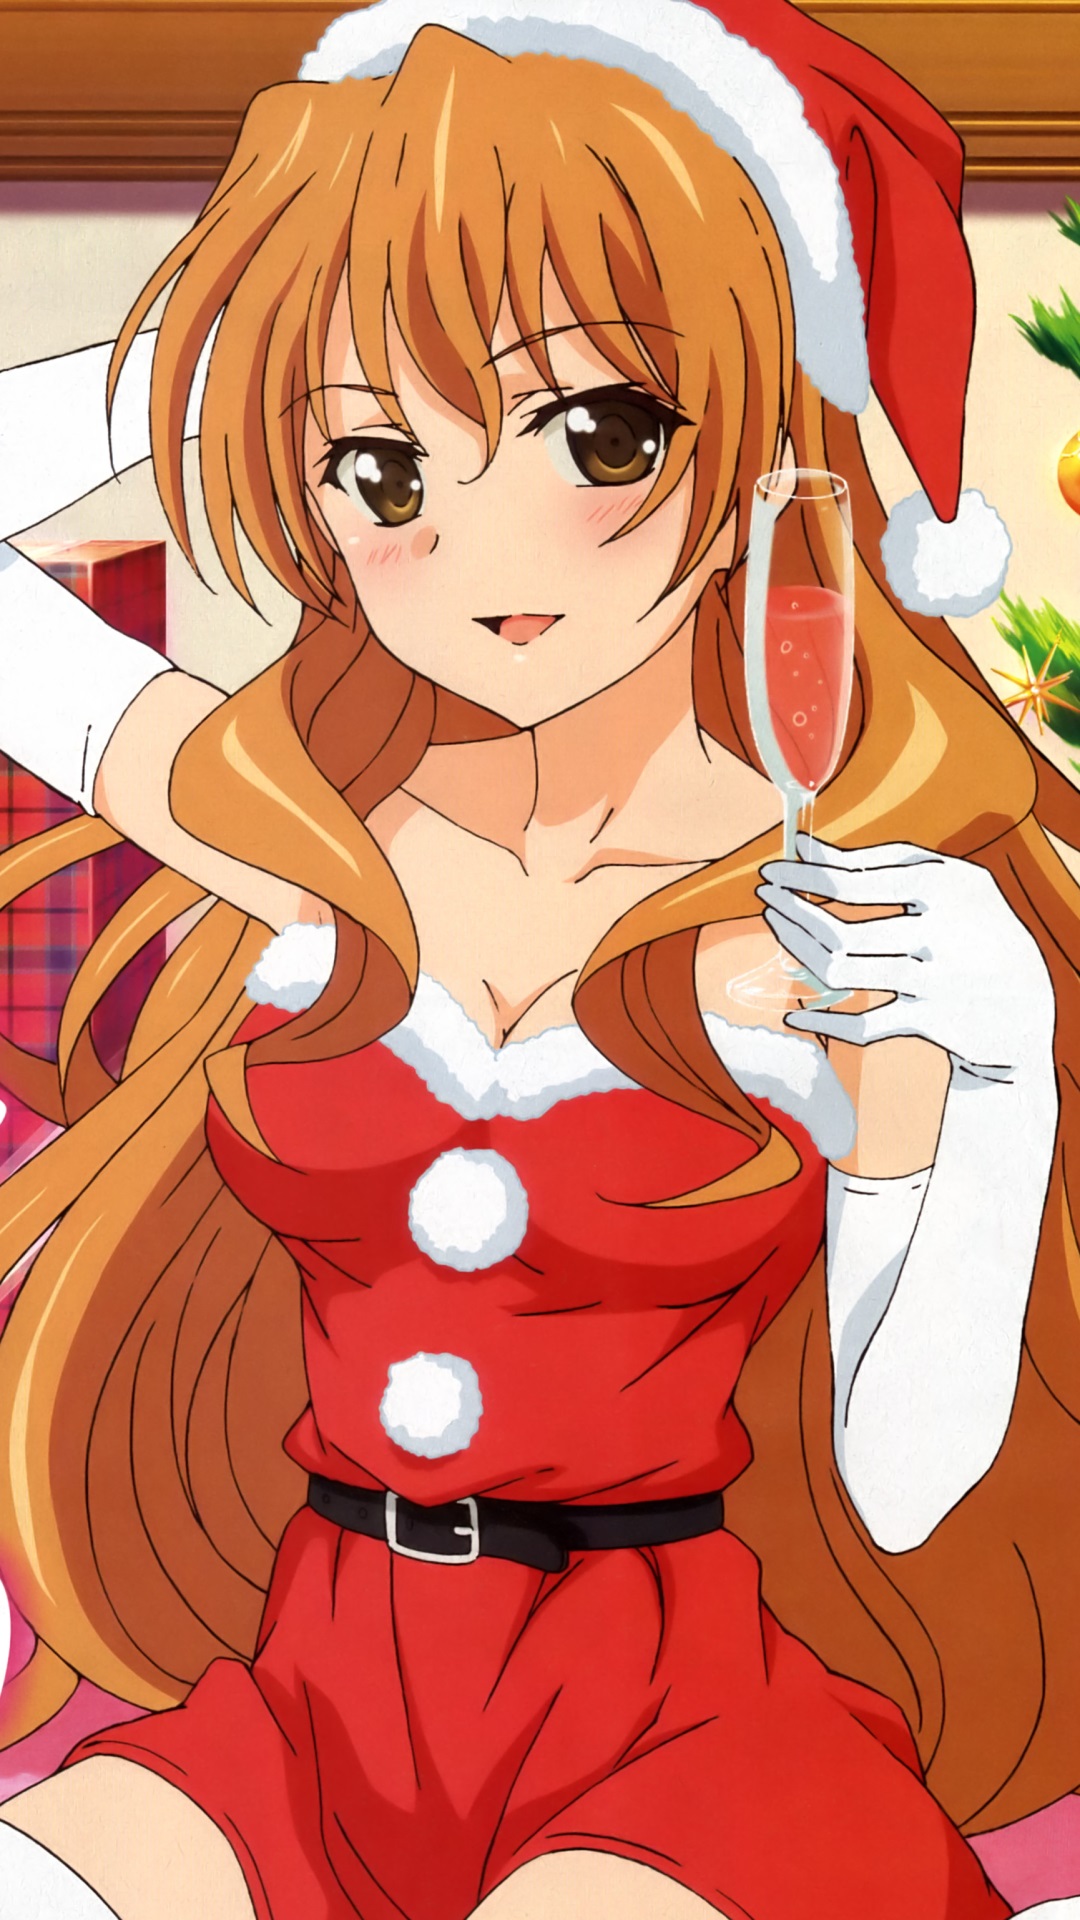 Christmas animeGolden Time Sony Xperia Z wallpaper1080x1920 1080x1920